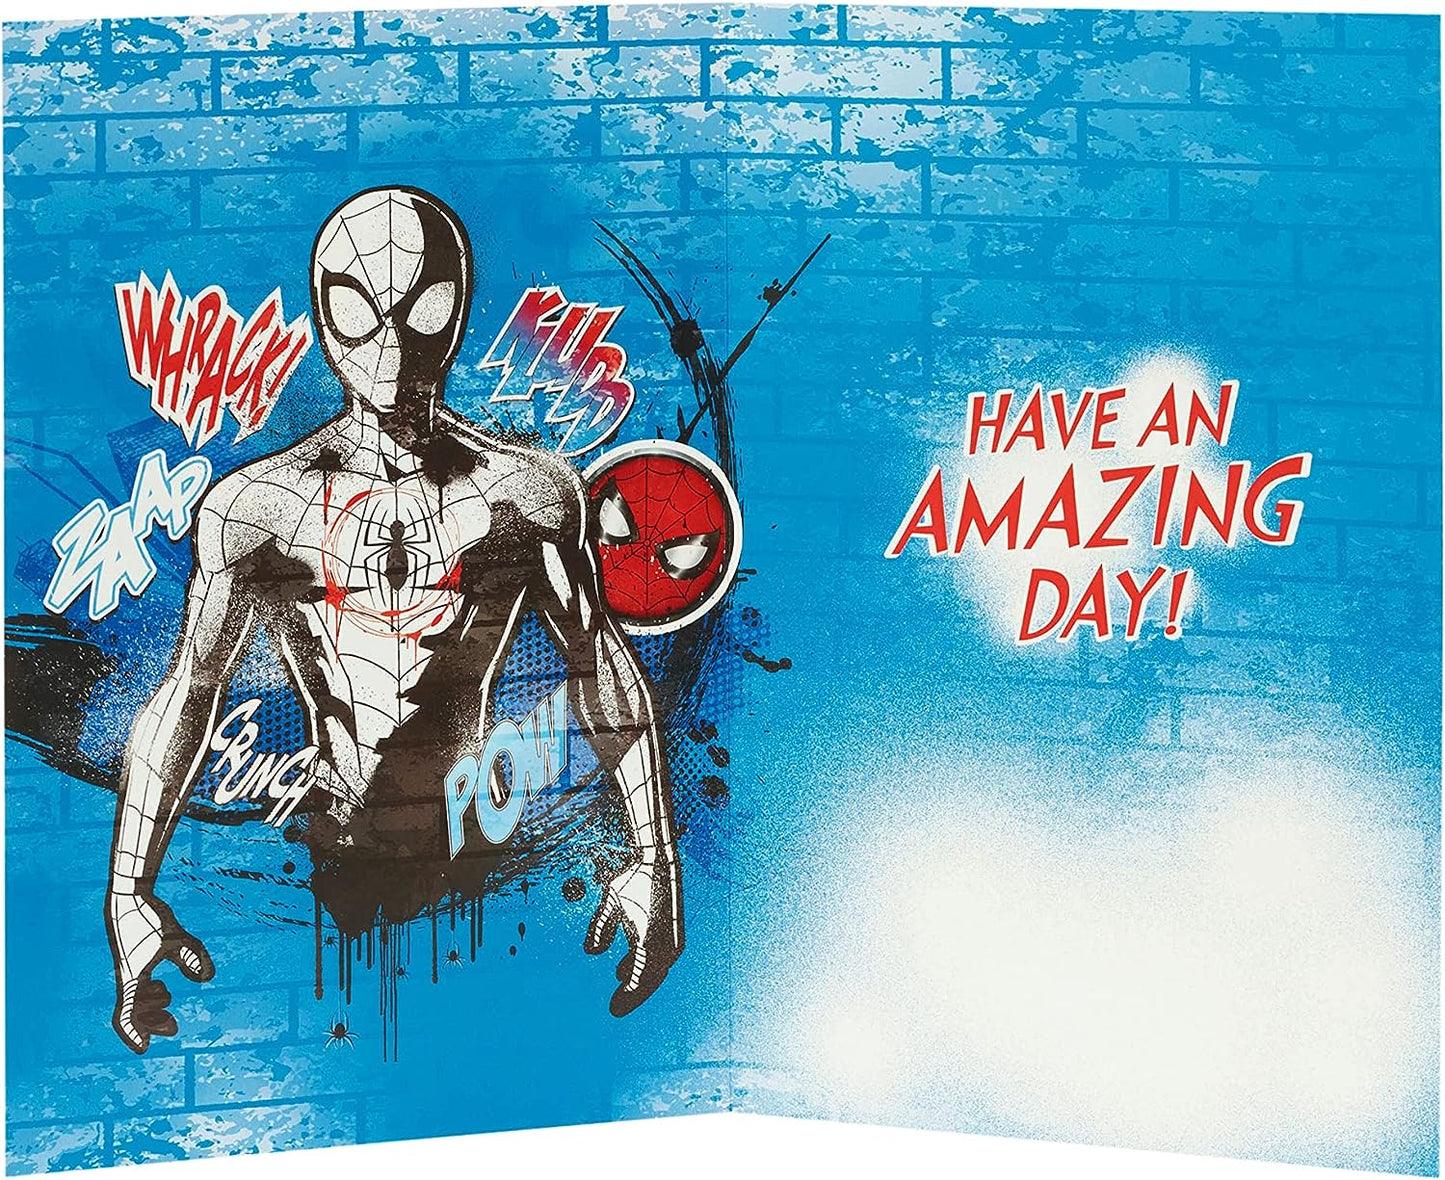 Marvel Hero Birthday Card